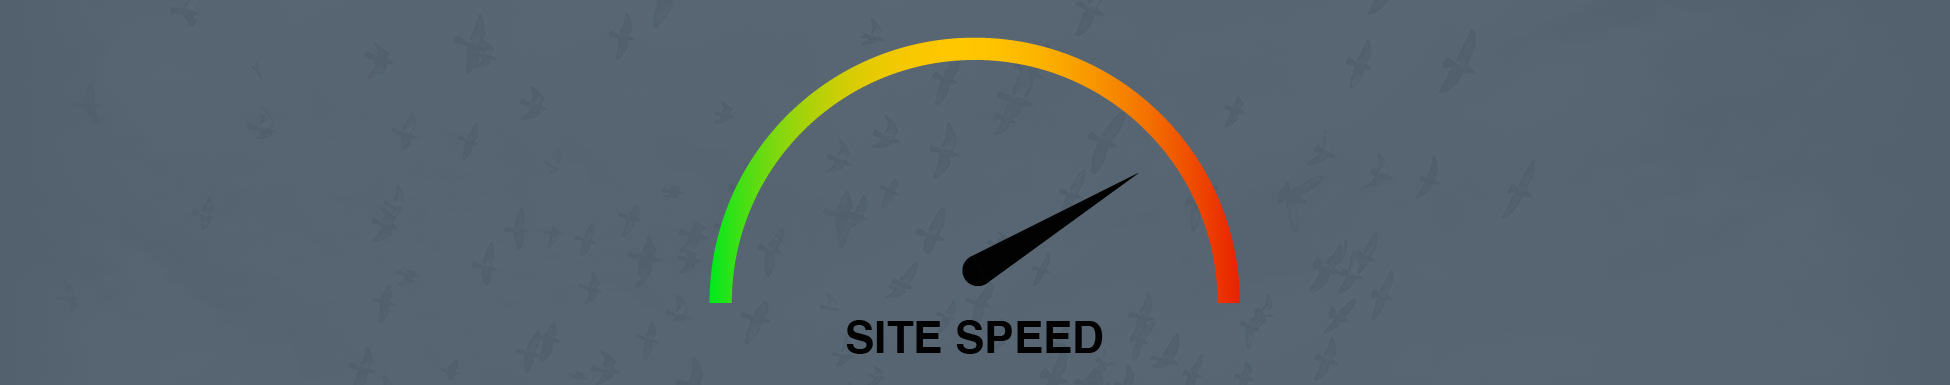 Site speed